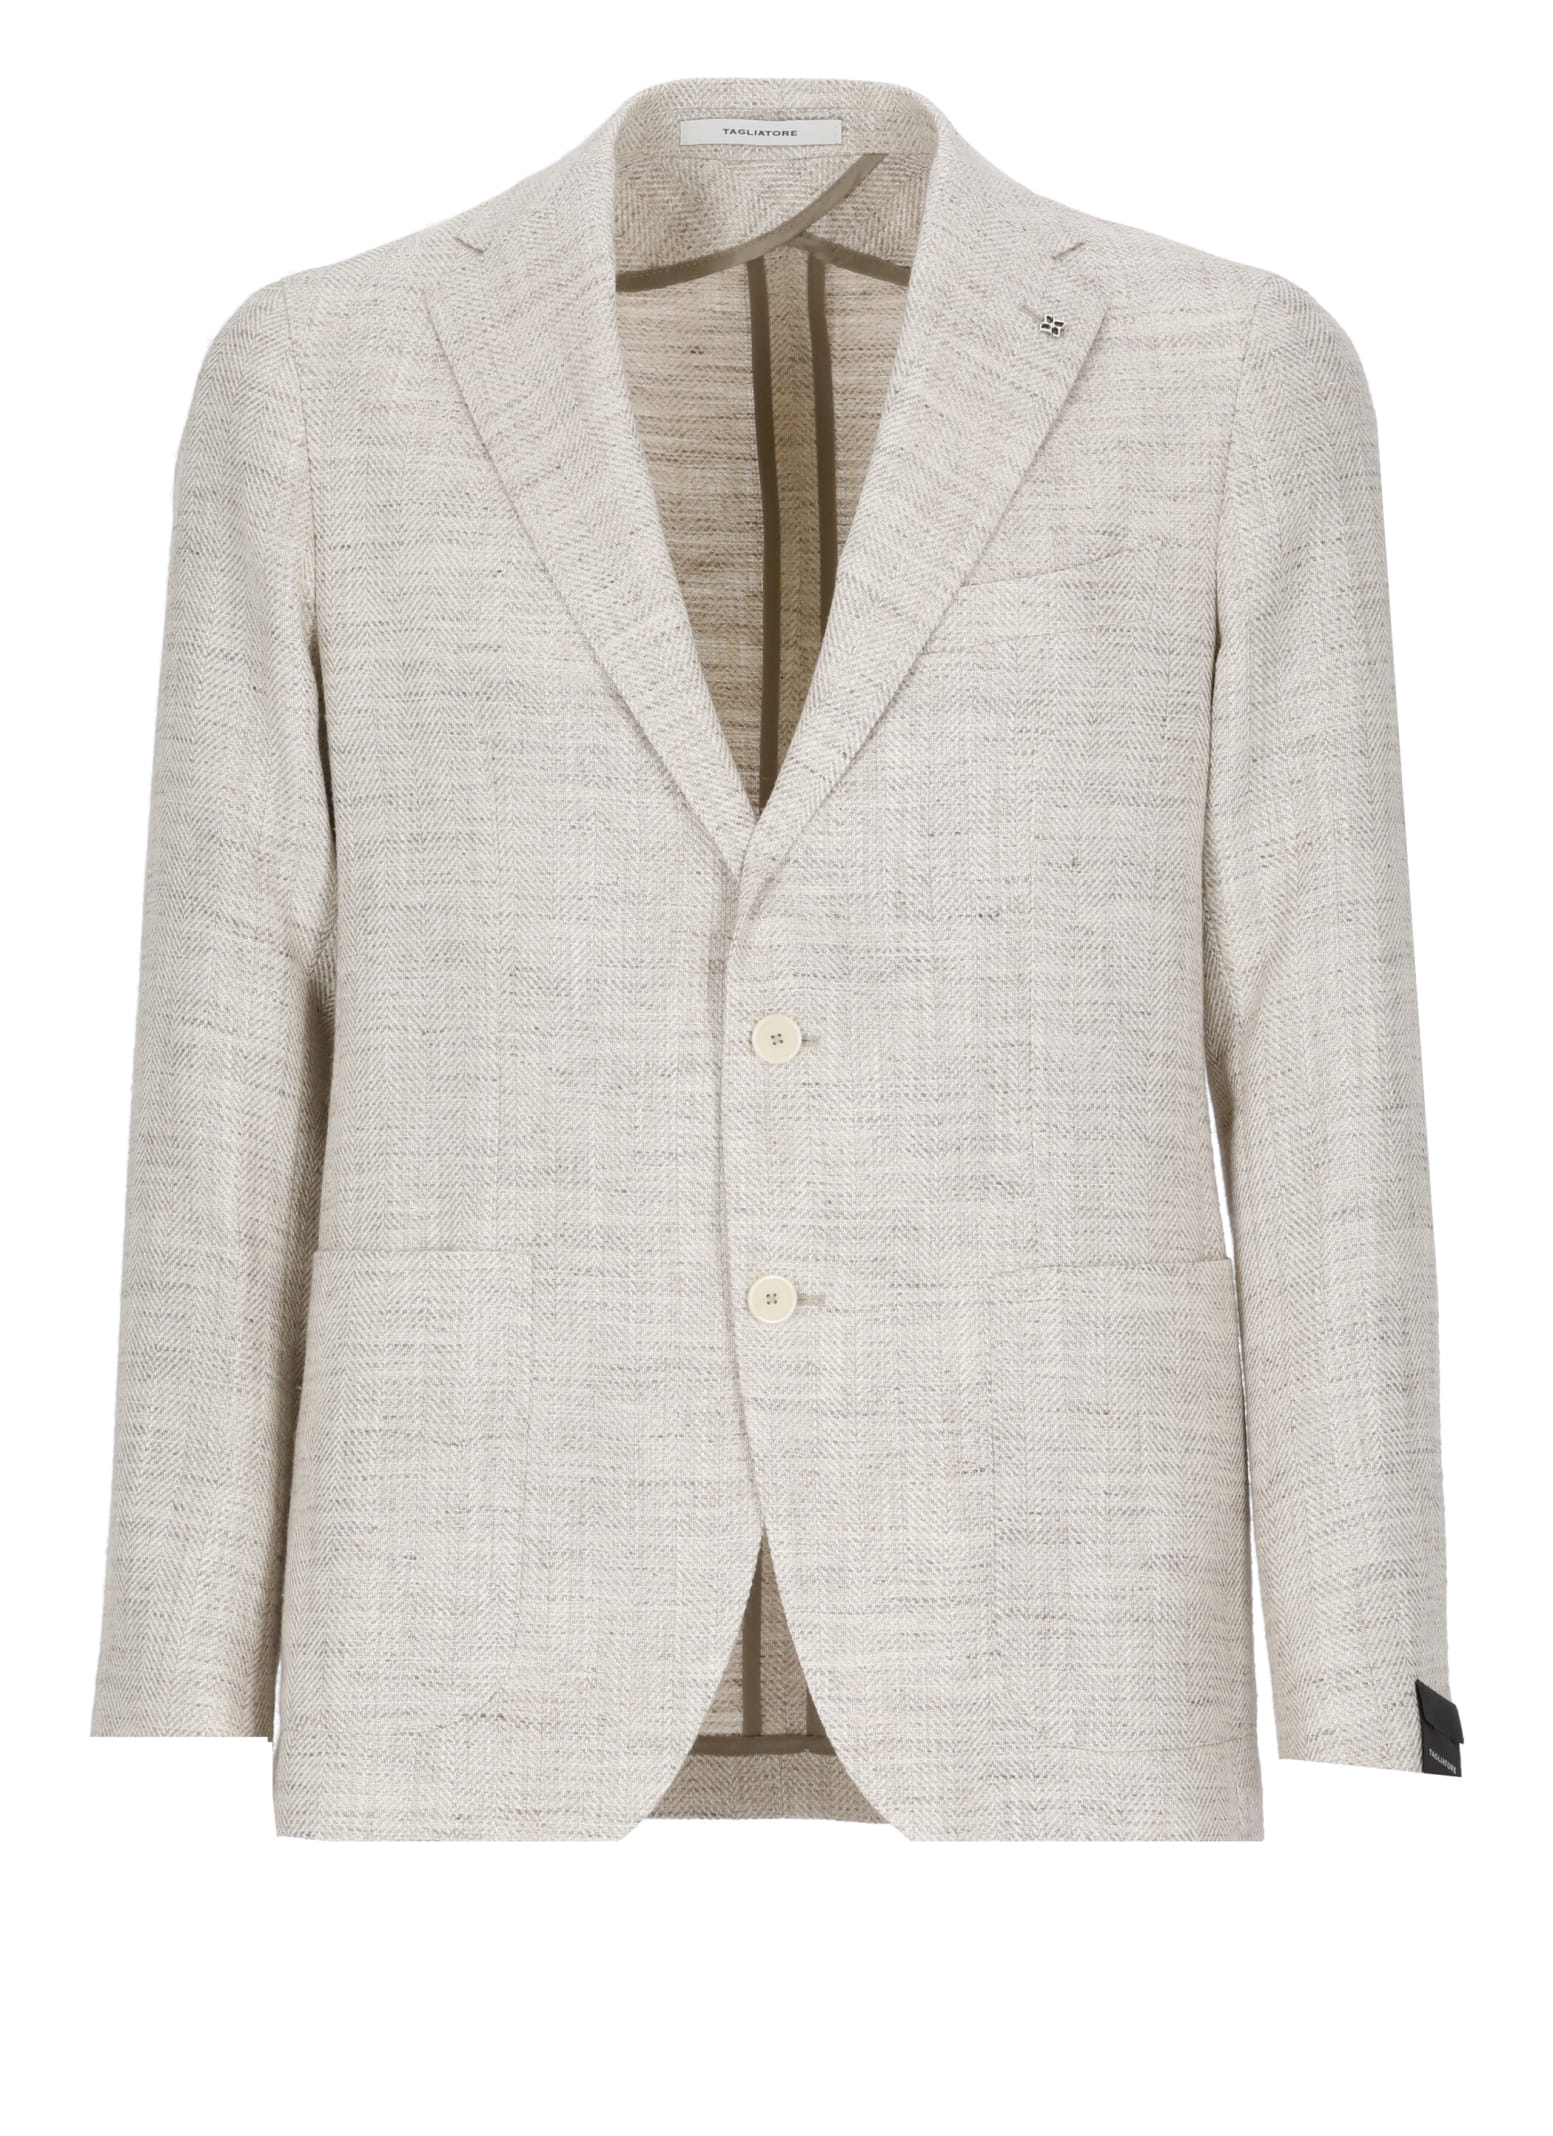 Tagliatore Silk, Linen And Cotton Blend Jacket In Avano